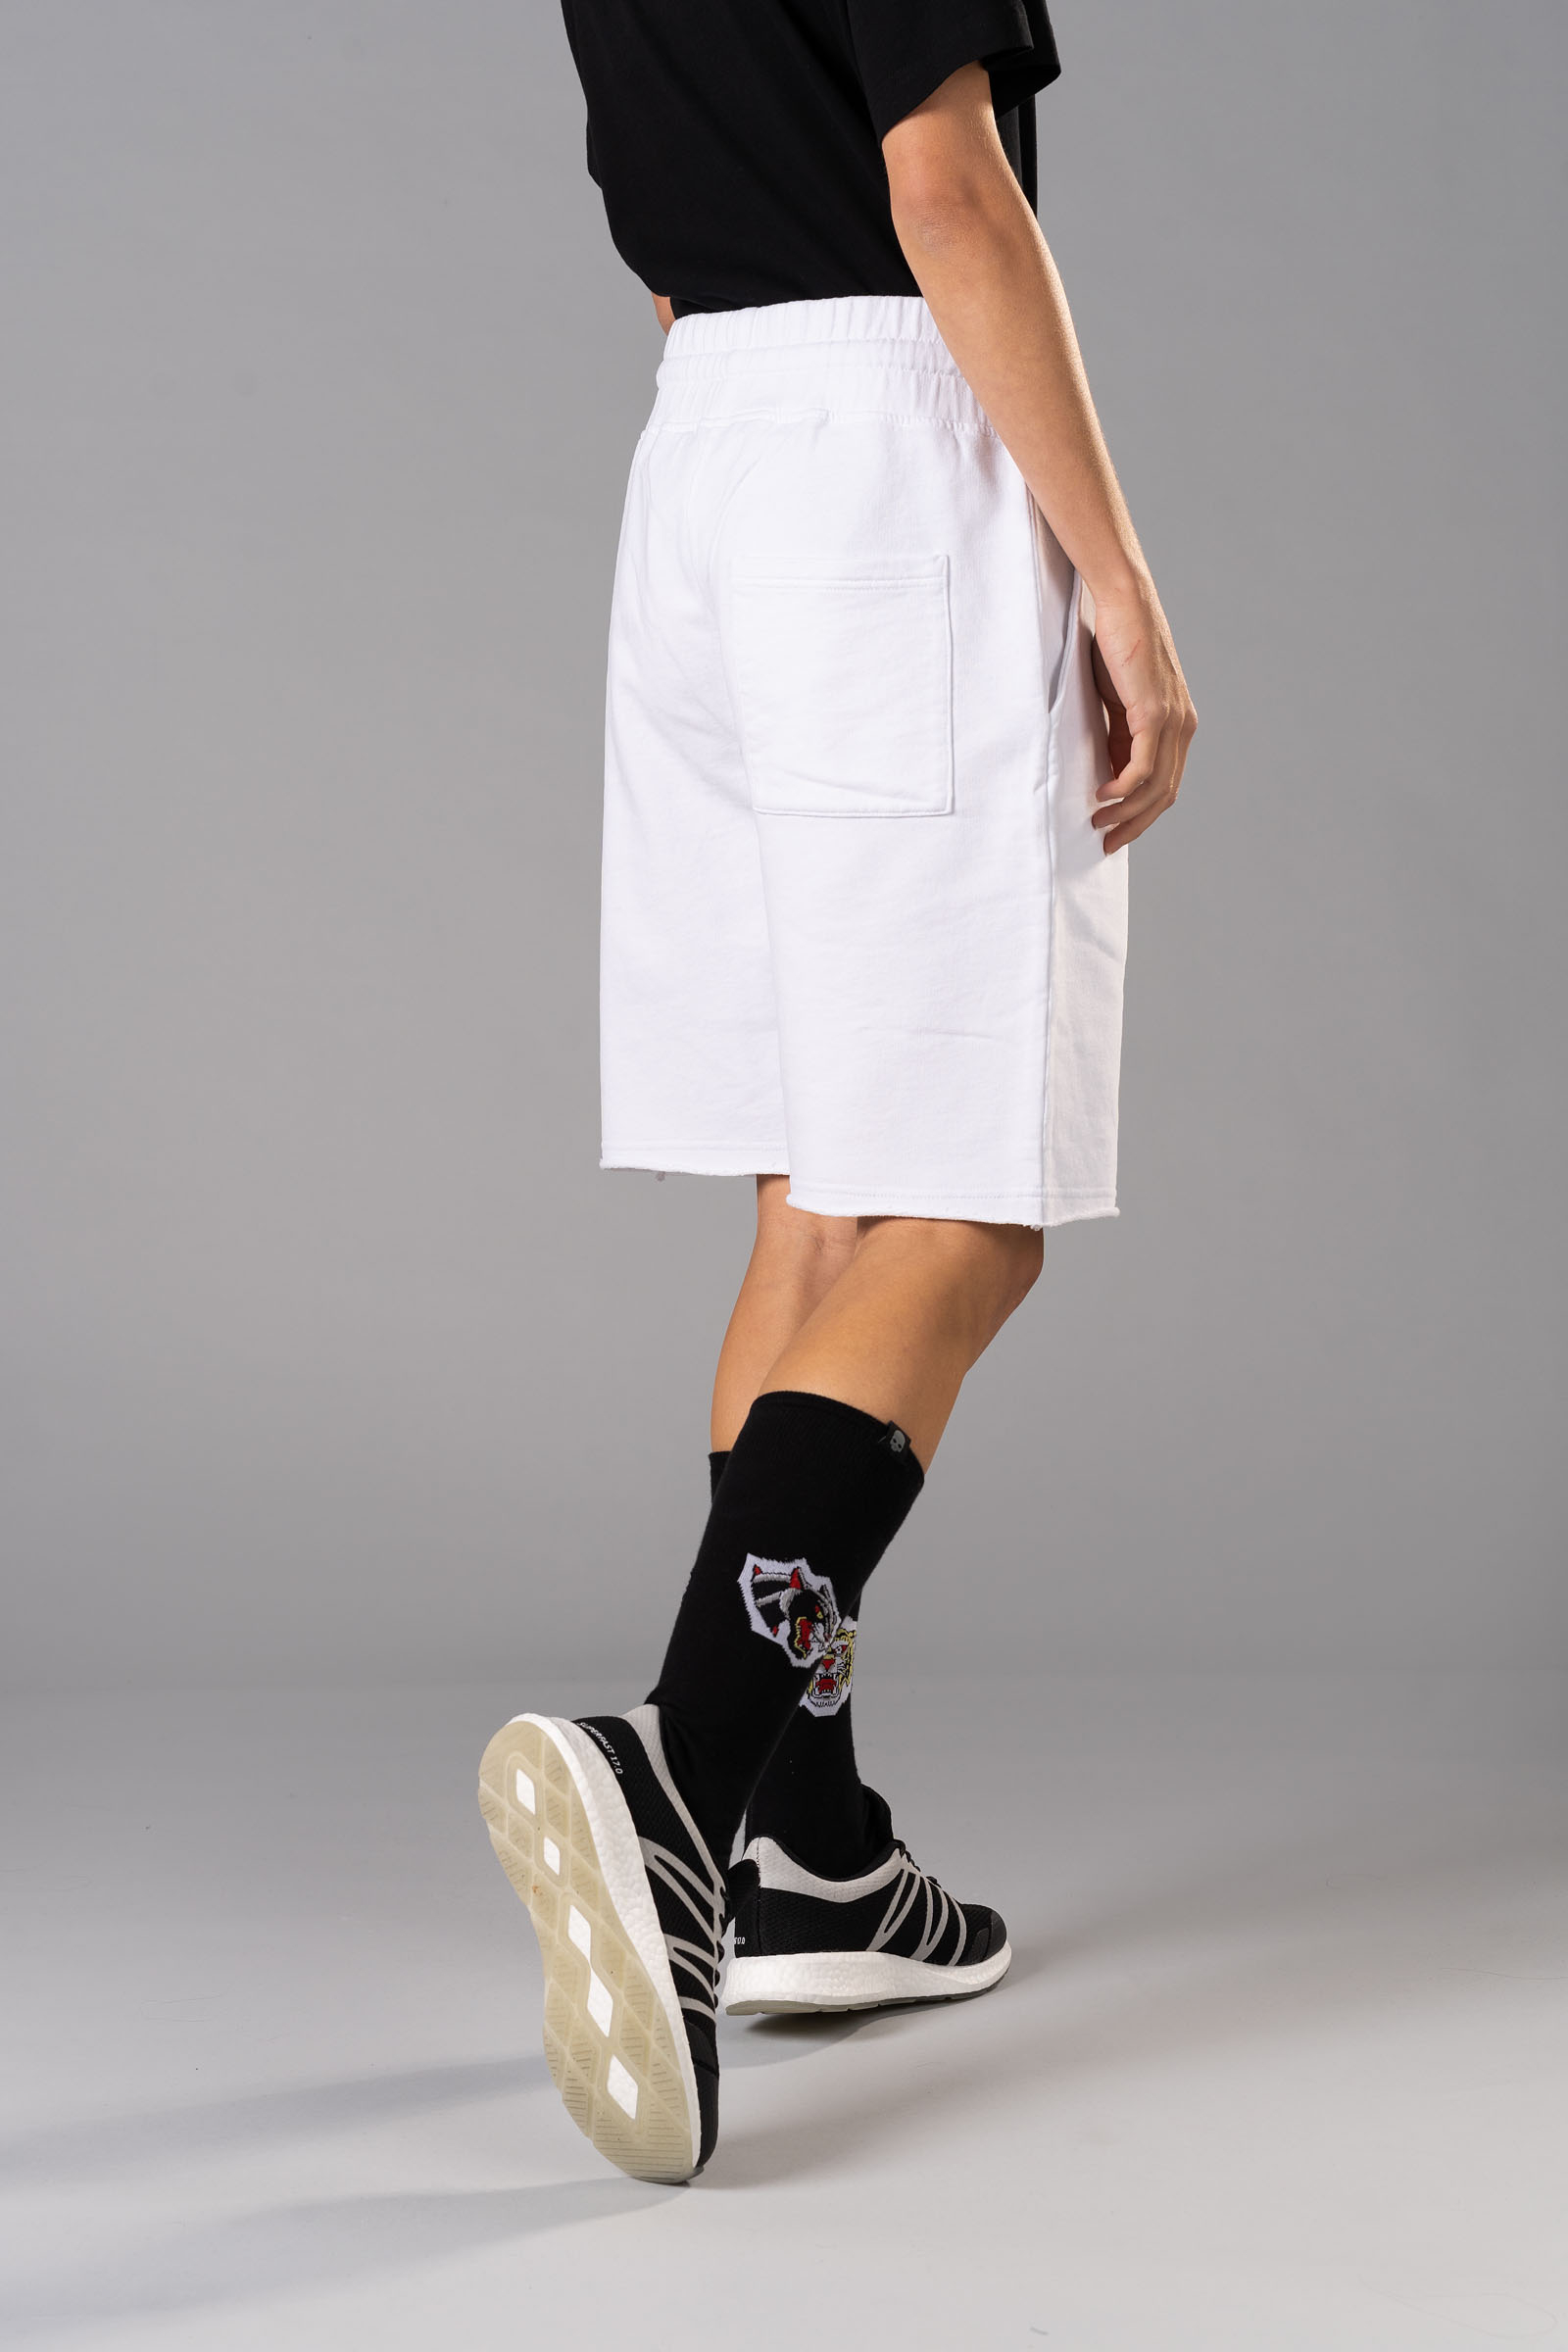 SKULL SHORTS - WHITE - Abbigliamento sportivo | Hydrogen